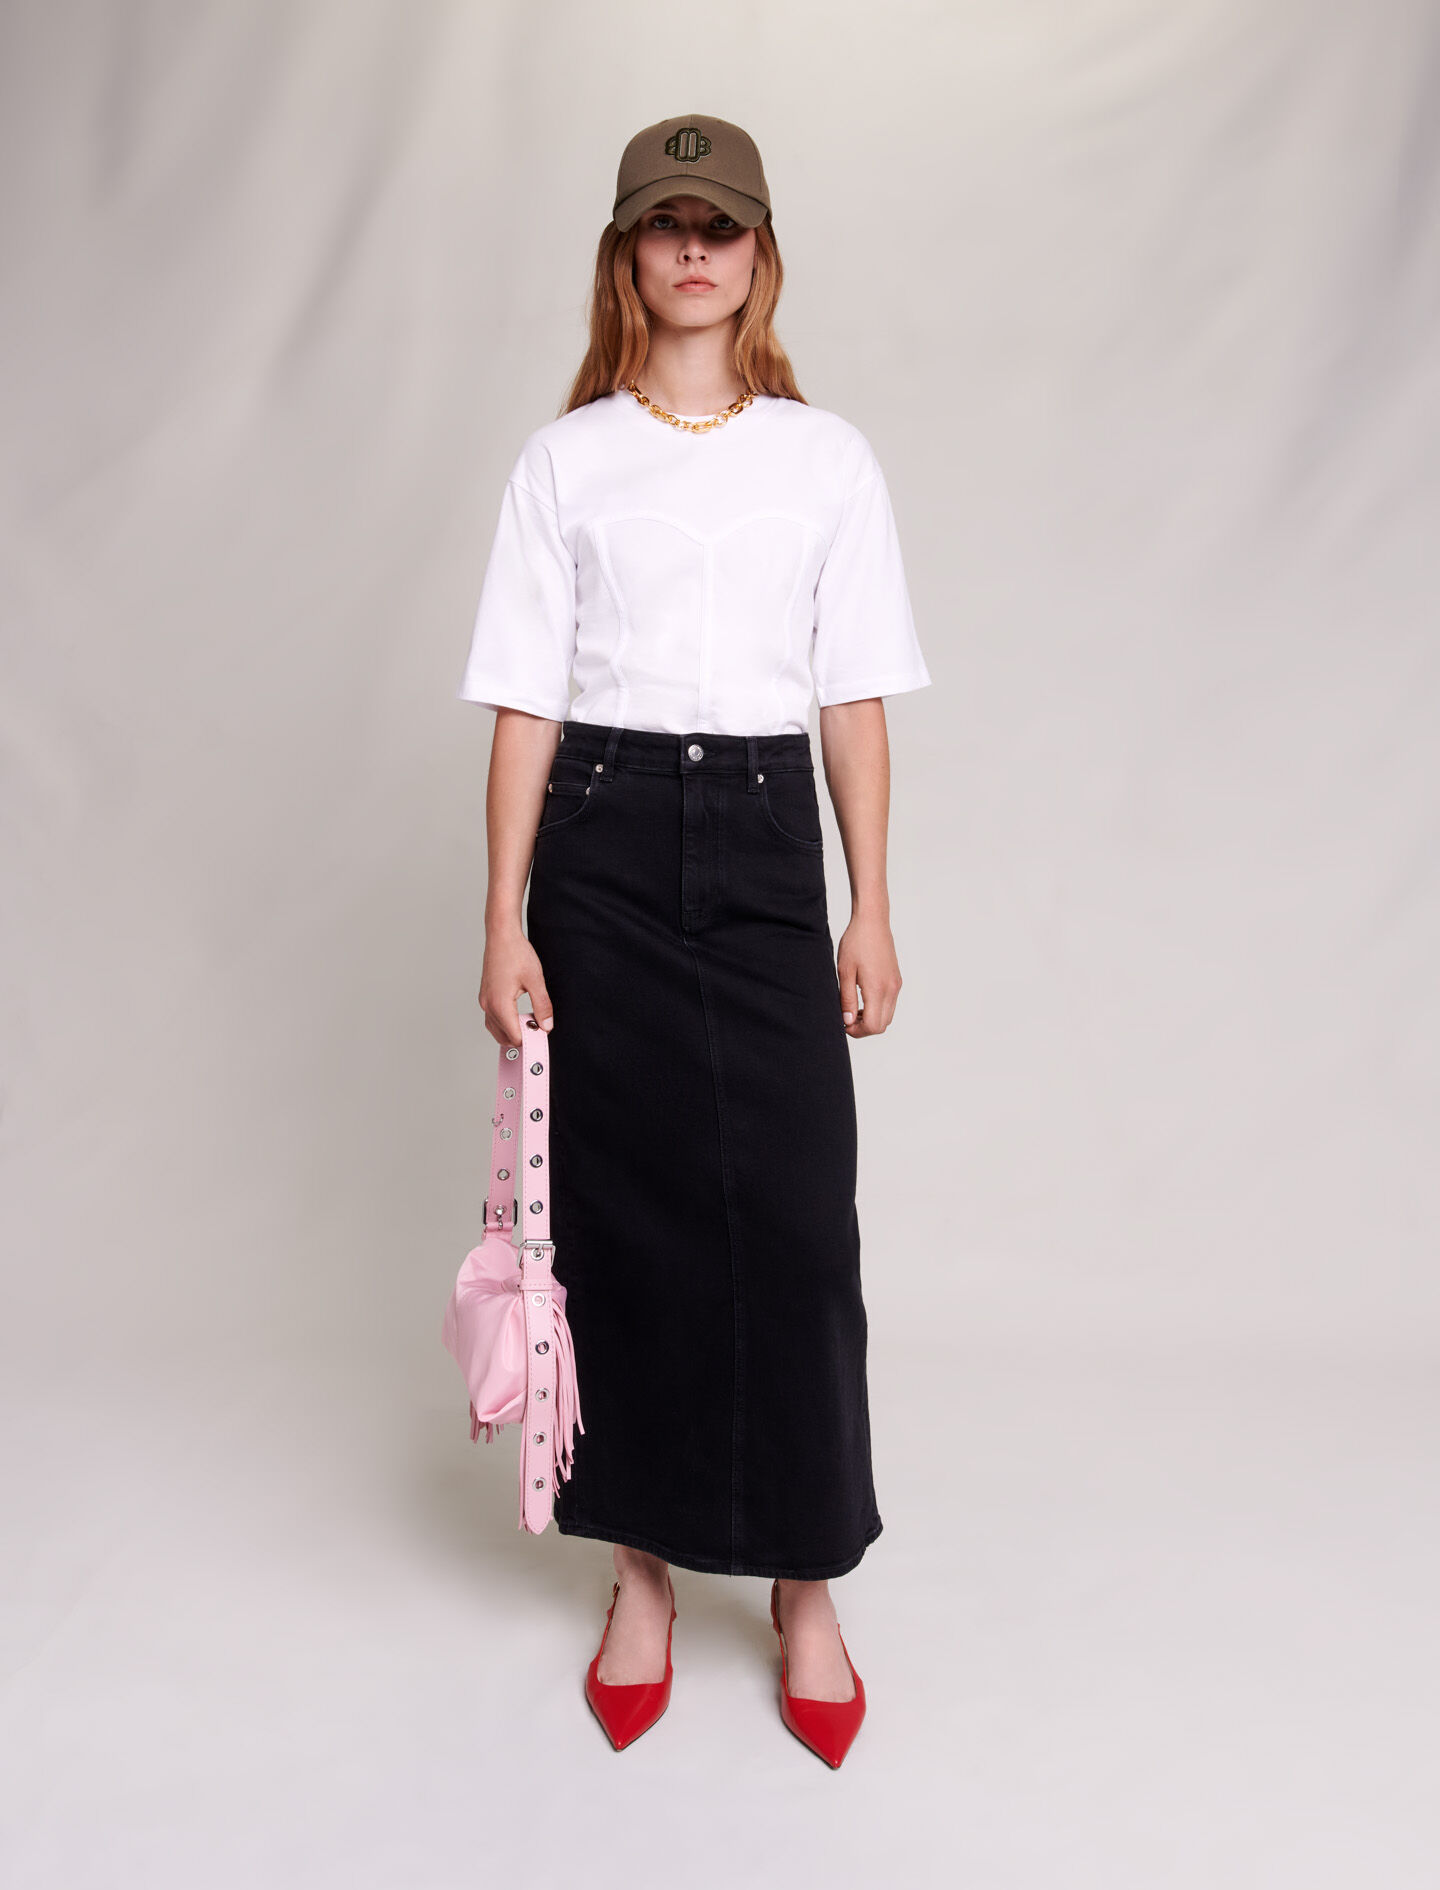 Plus Size Denim Skirts | Fashion Plus Size Denim Skirts | SHEIN South Africa